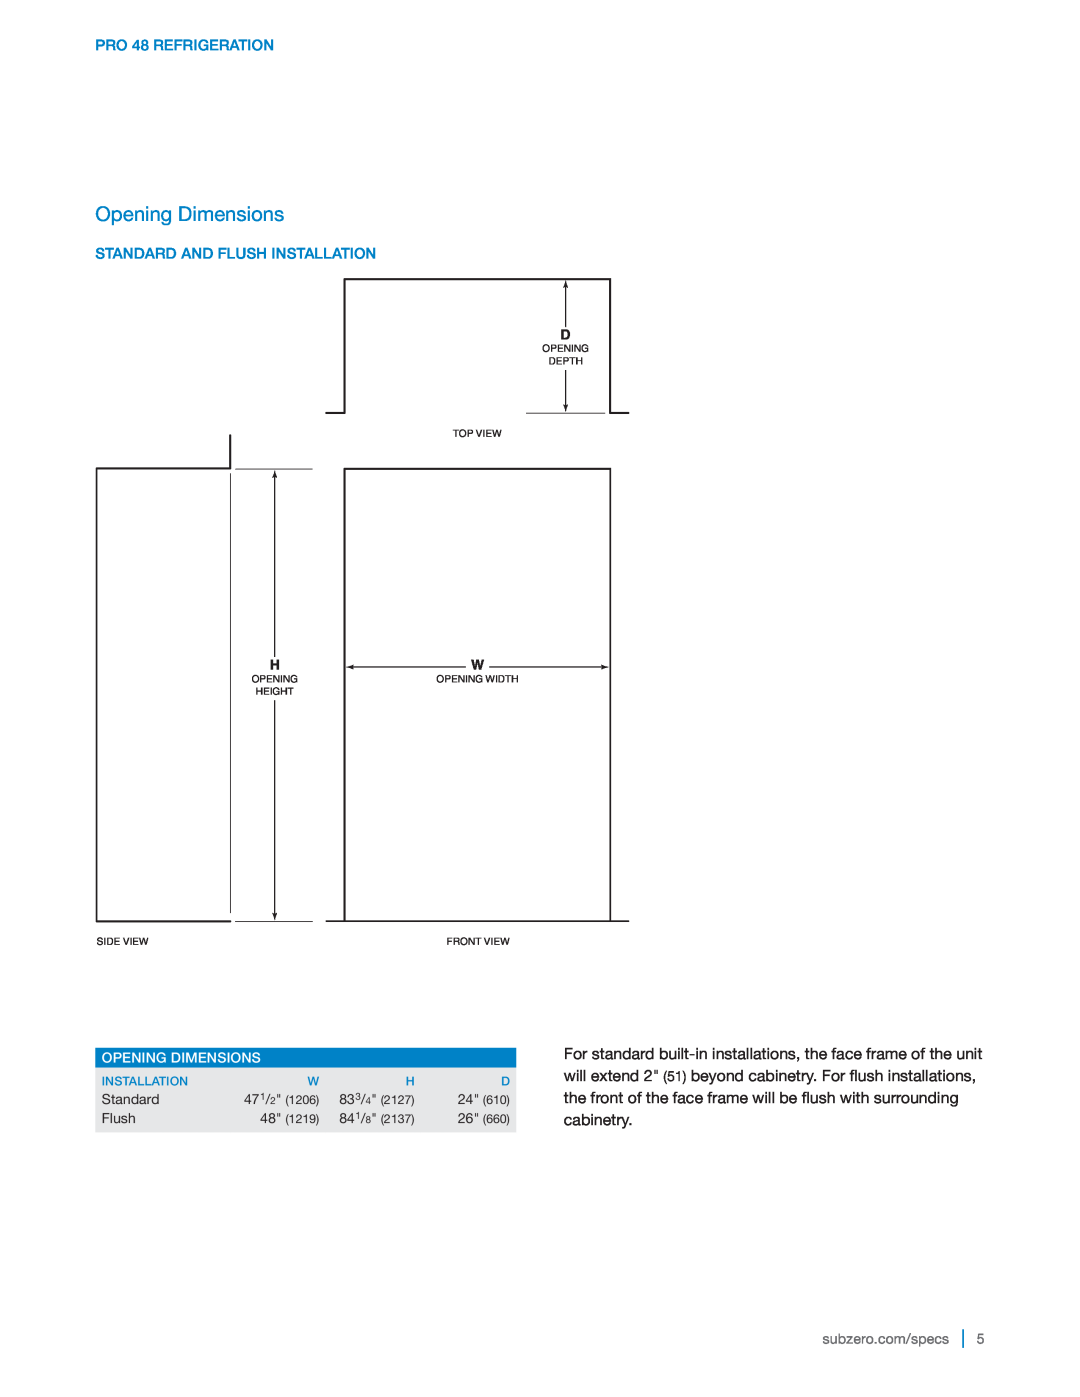 Sub-Zero 648PROG manual Opening Dimensions, PRO 48 REFRIGERATION, Standard And Flush Installation, 1206, 833/4, 1219, 841/8 